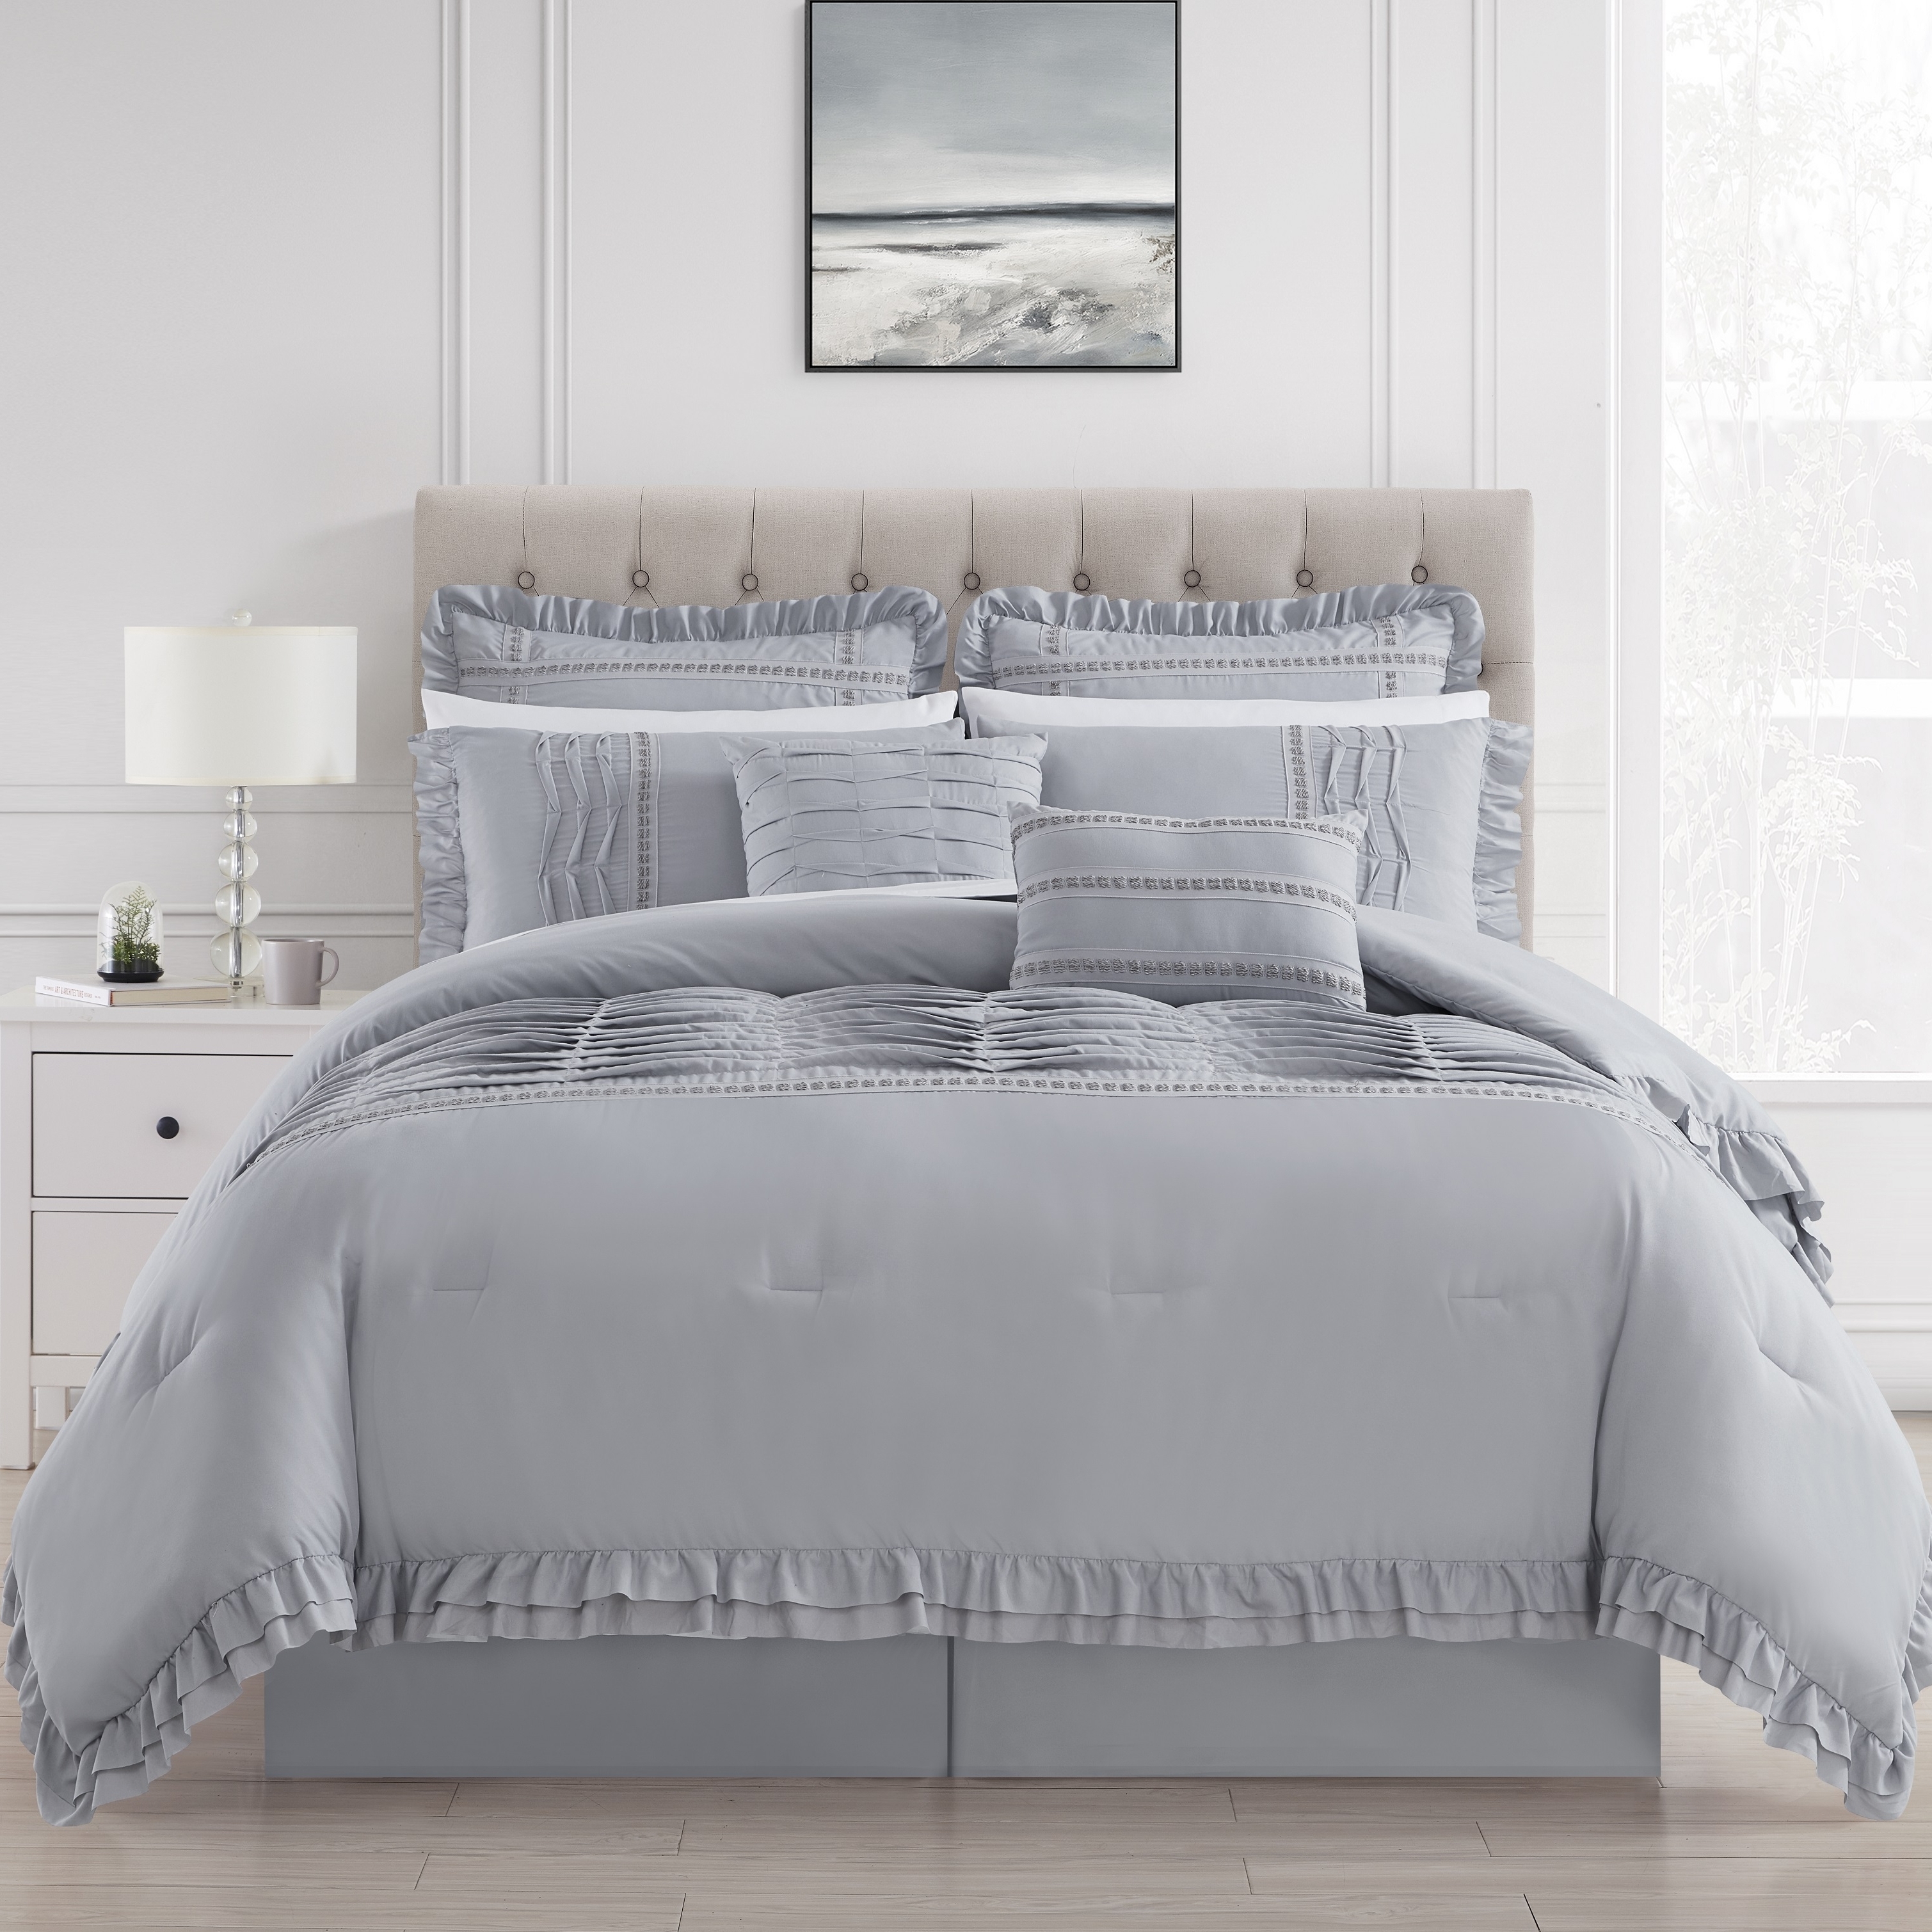 Yvonna 8 Piece Comforter Set Ruffled Pleated Flange Border Design Bedding - Blush, King